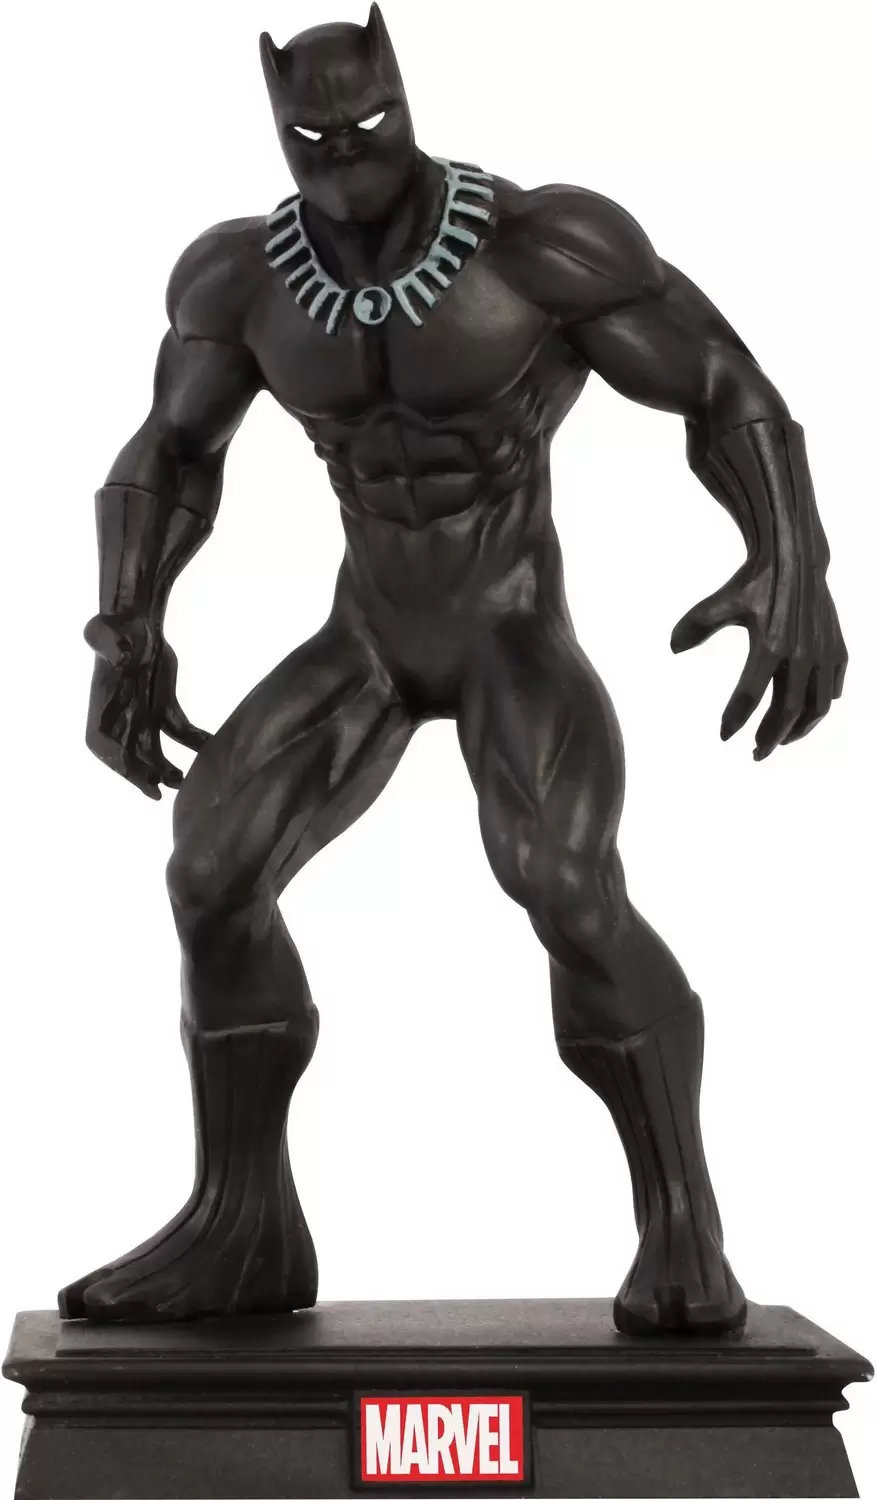 MARVEL - Panini Super Heroes - Black Panther